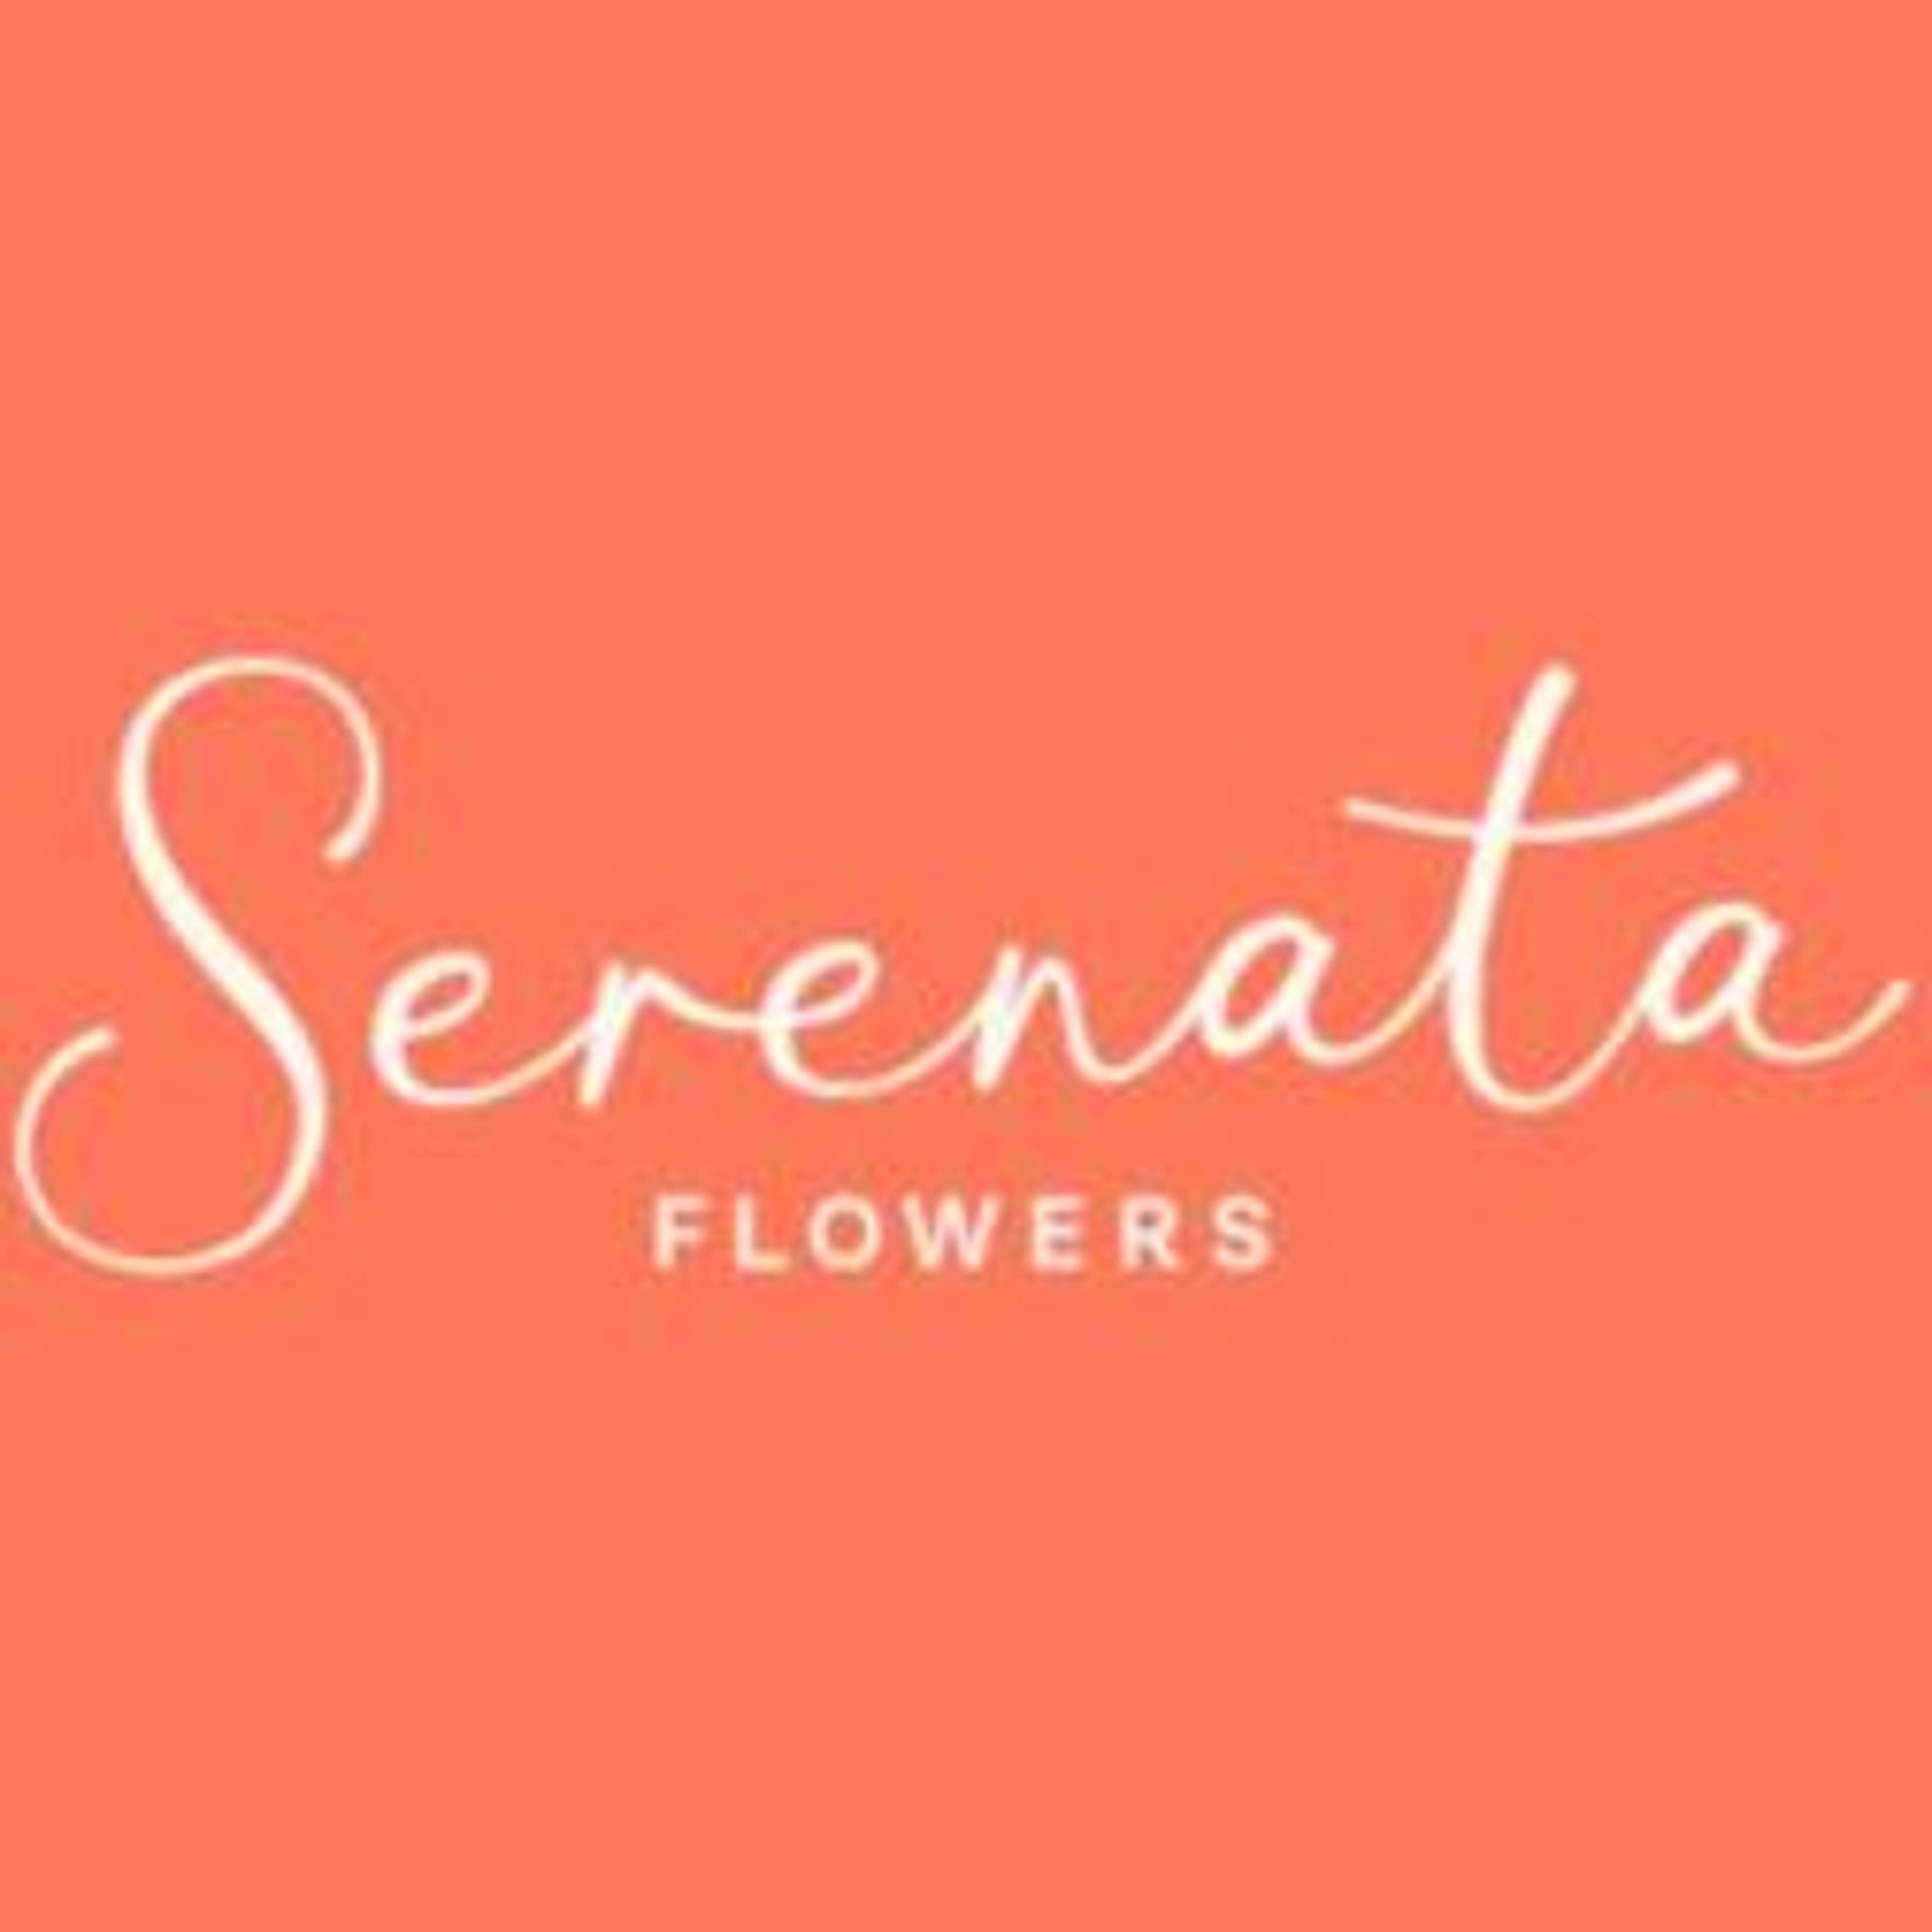  Serenata Flowers 